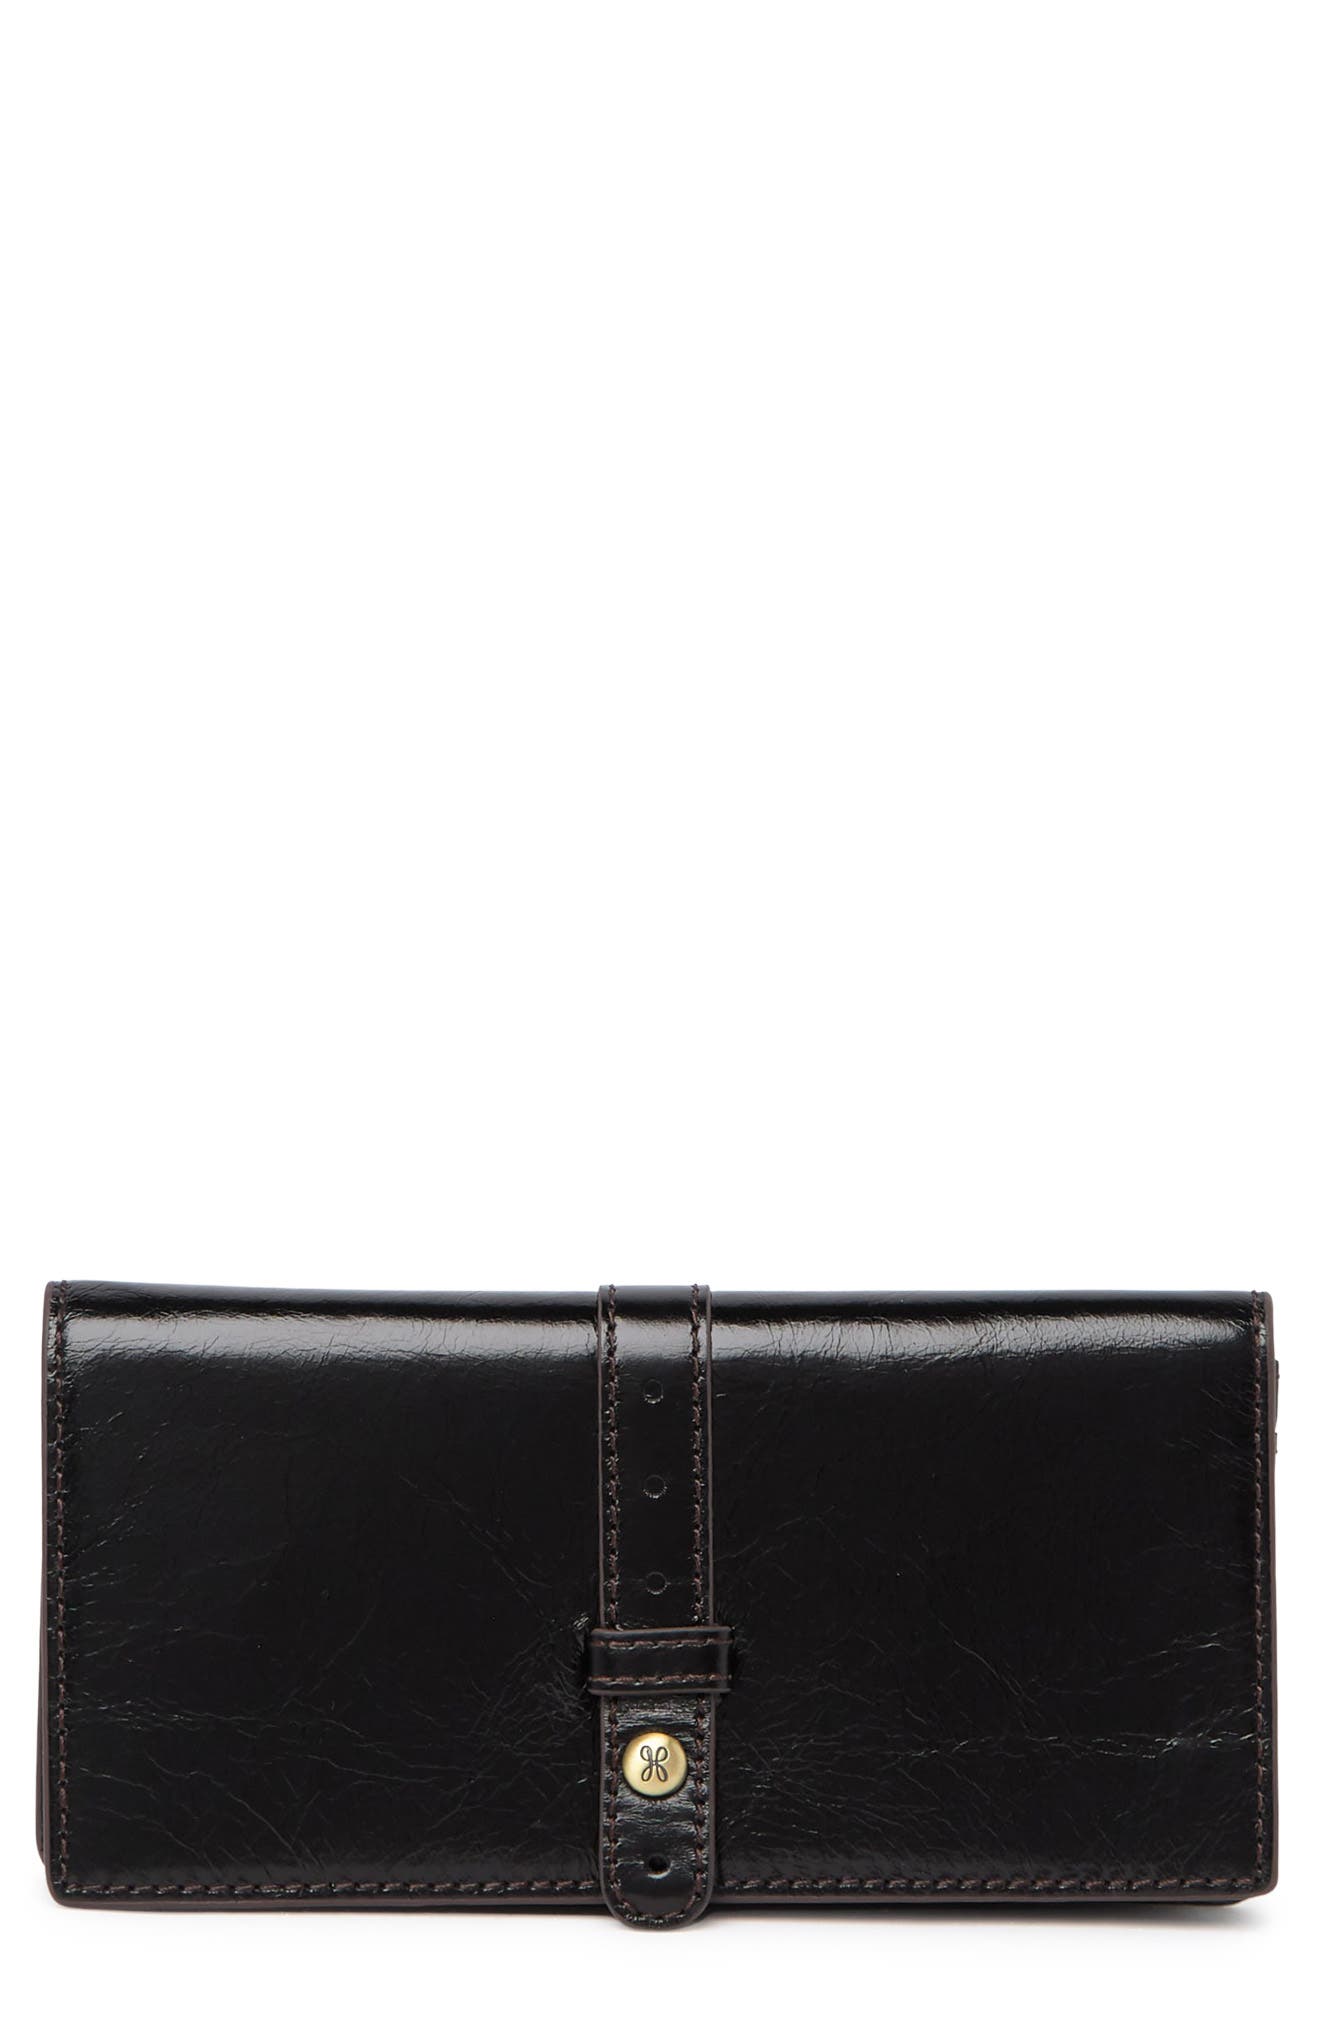 Hobo Alta Leather Wallet In Black